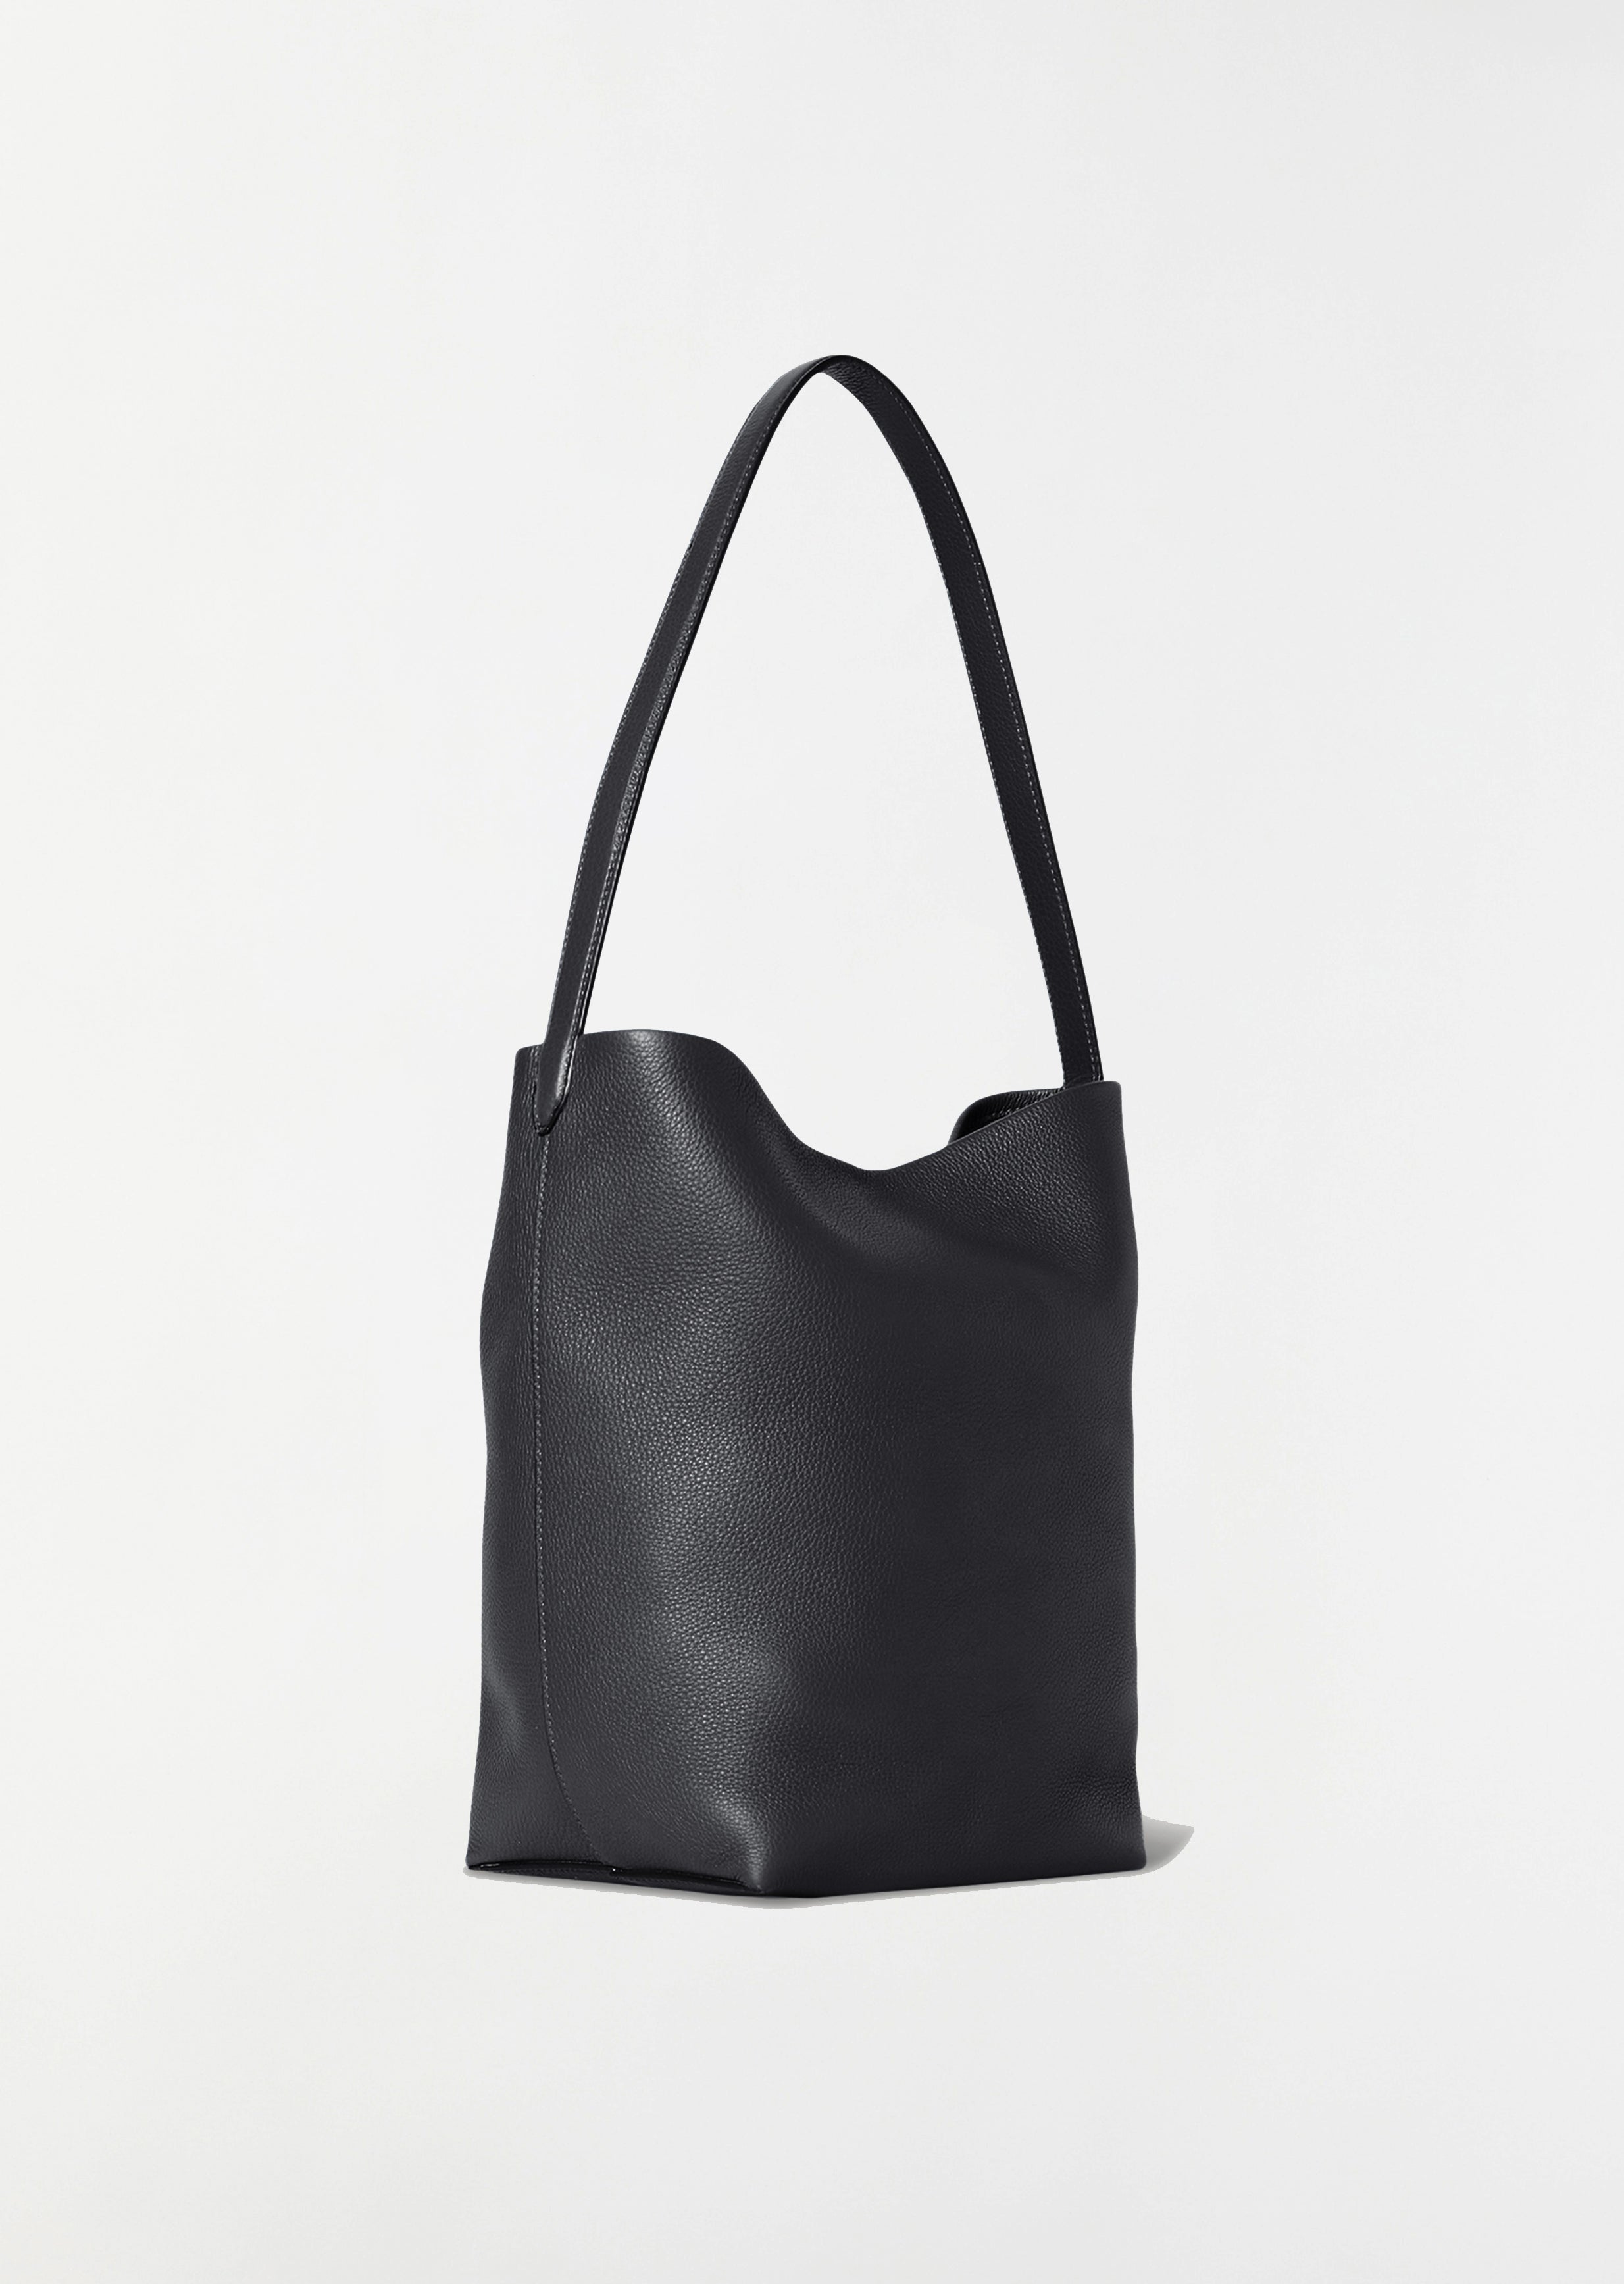 Thela Medium Black Leather Tote Bag for Women